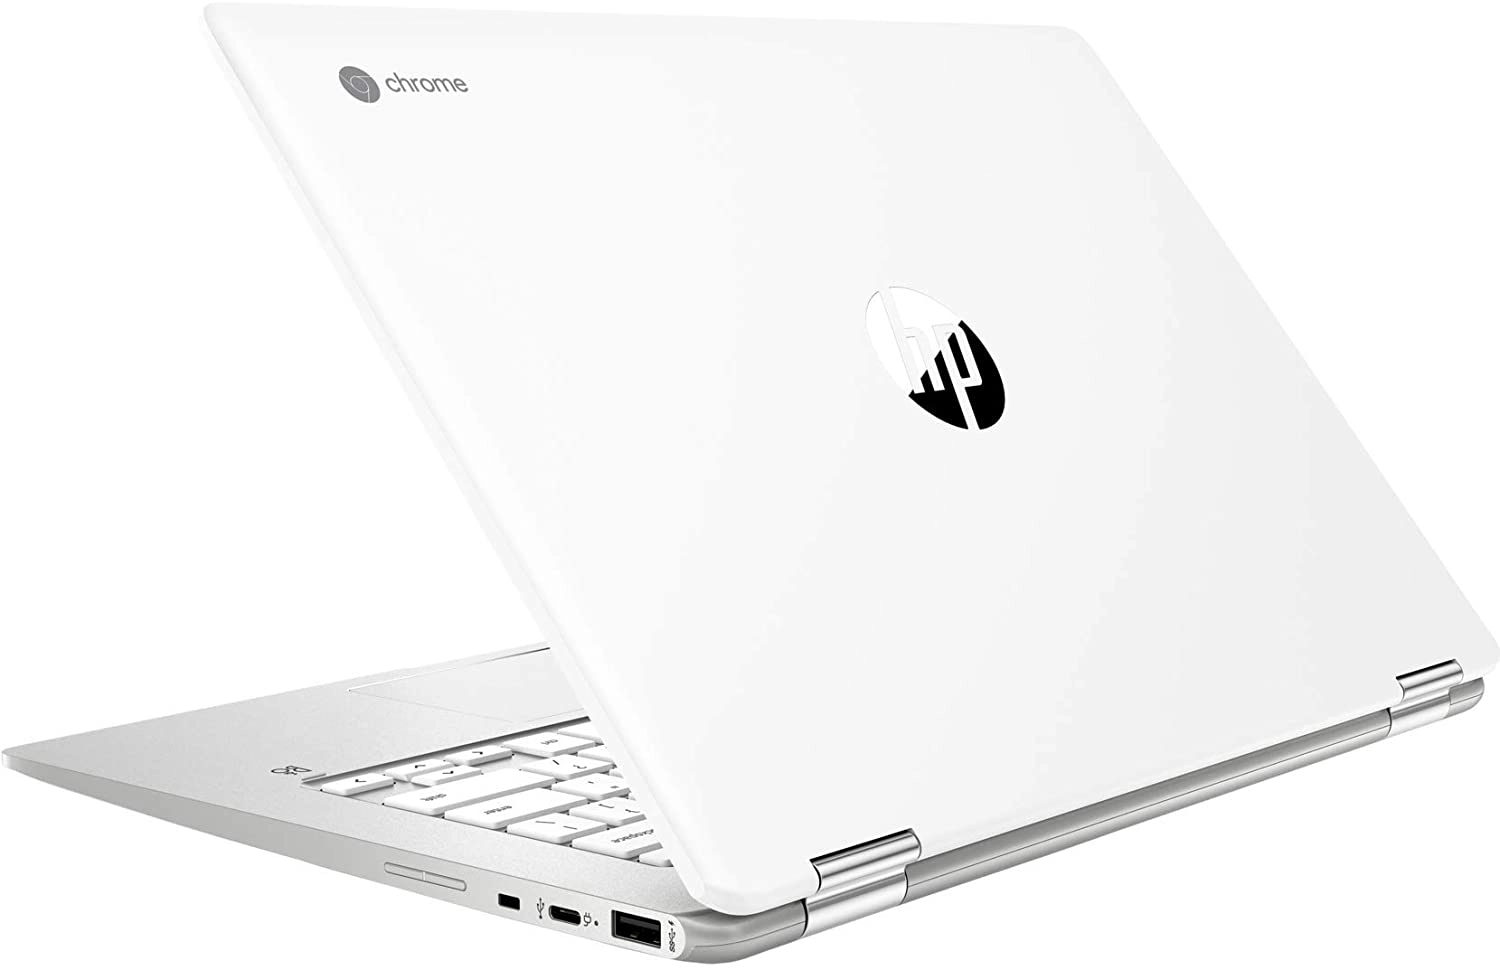 HP Chromebook x360 14b laptop image